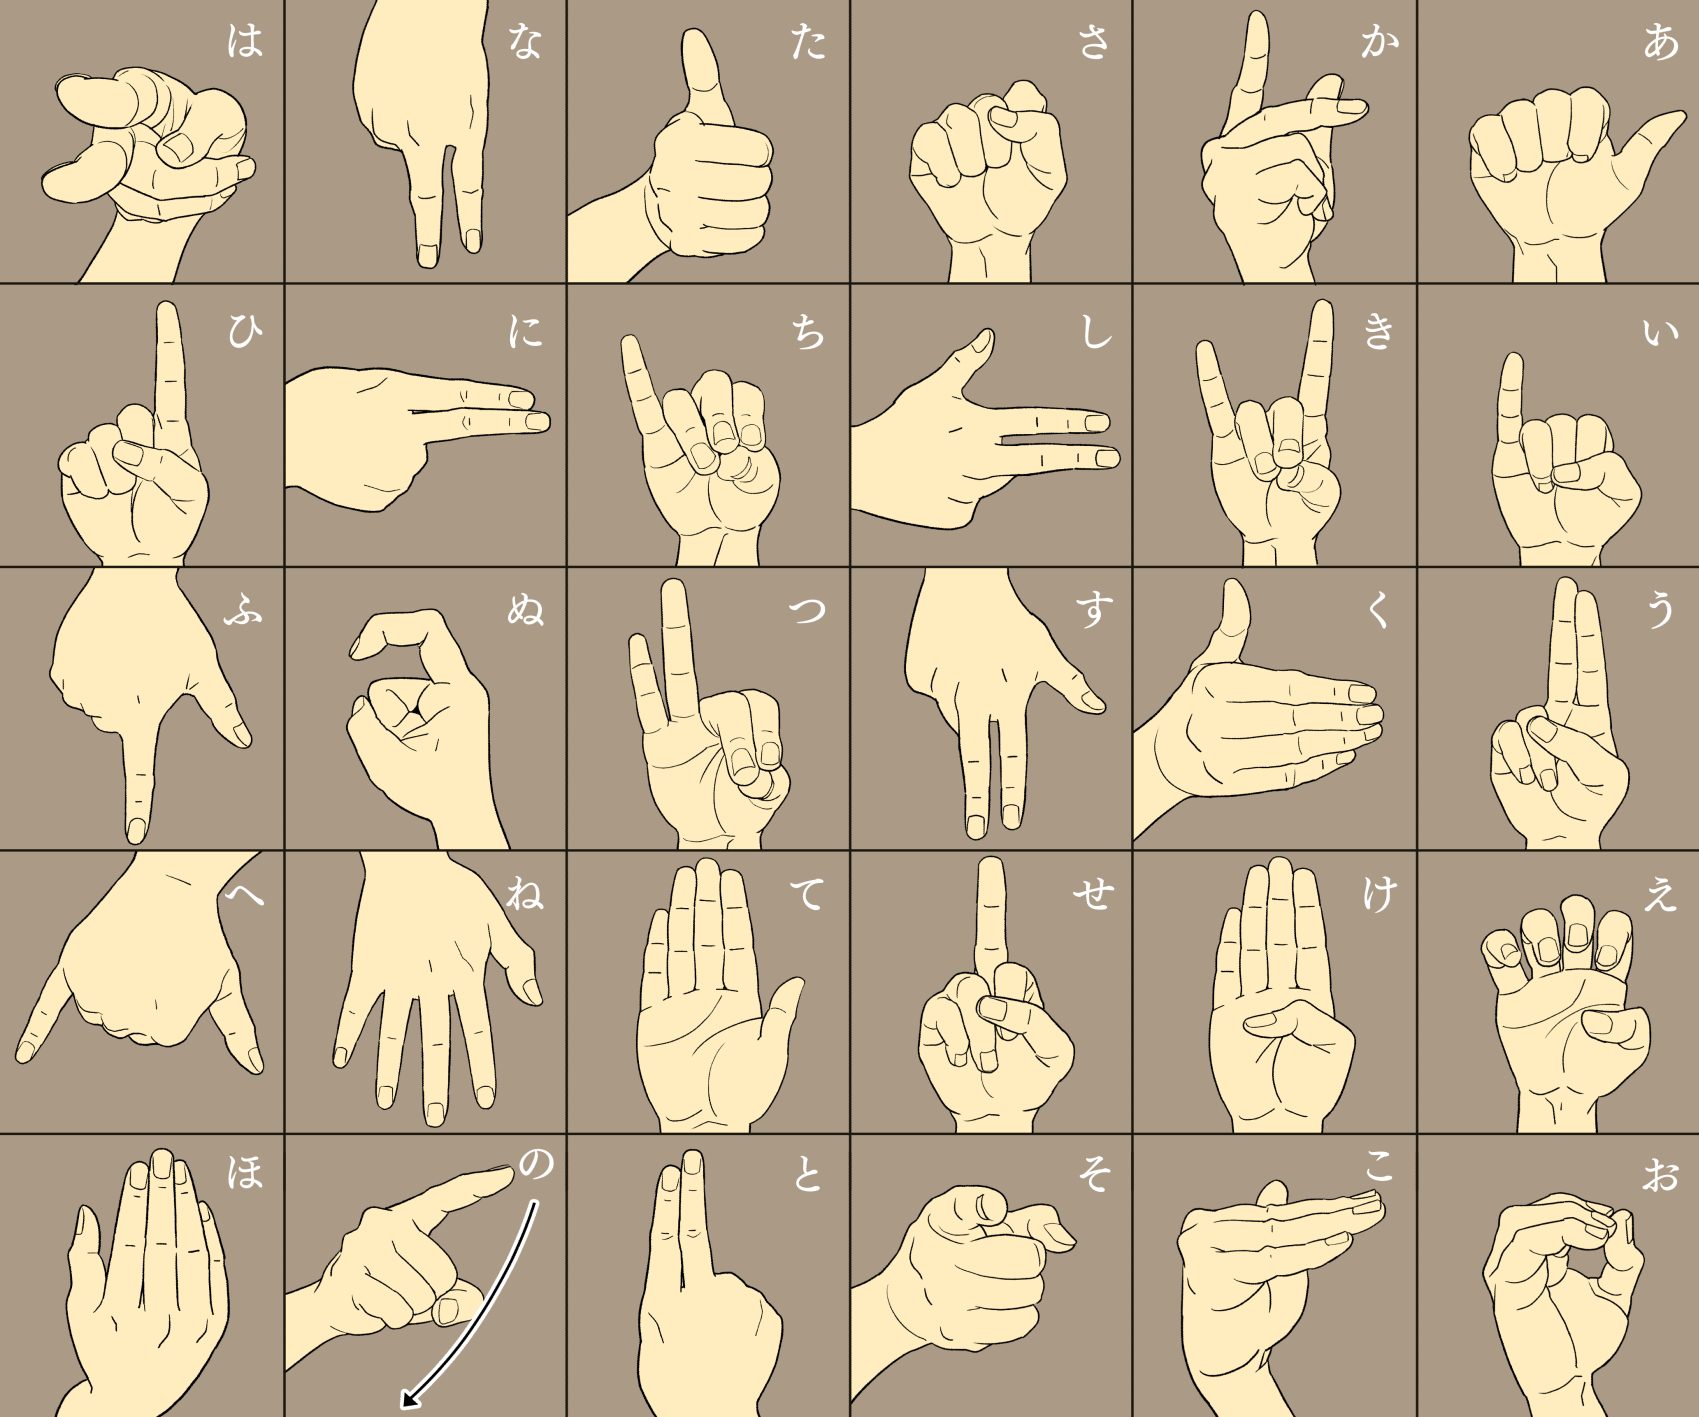 Ike 指文字50音ひらがなver も作ってみた 手話は音声言語ではなく視覚コミュニケーション 手話 T Co Zgng3apakj Twitter